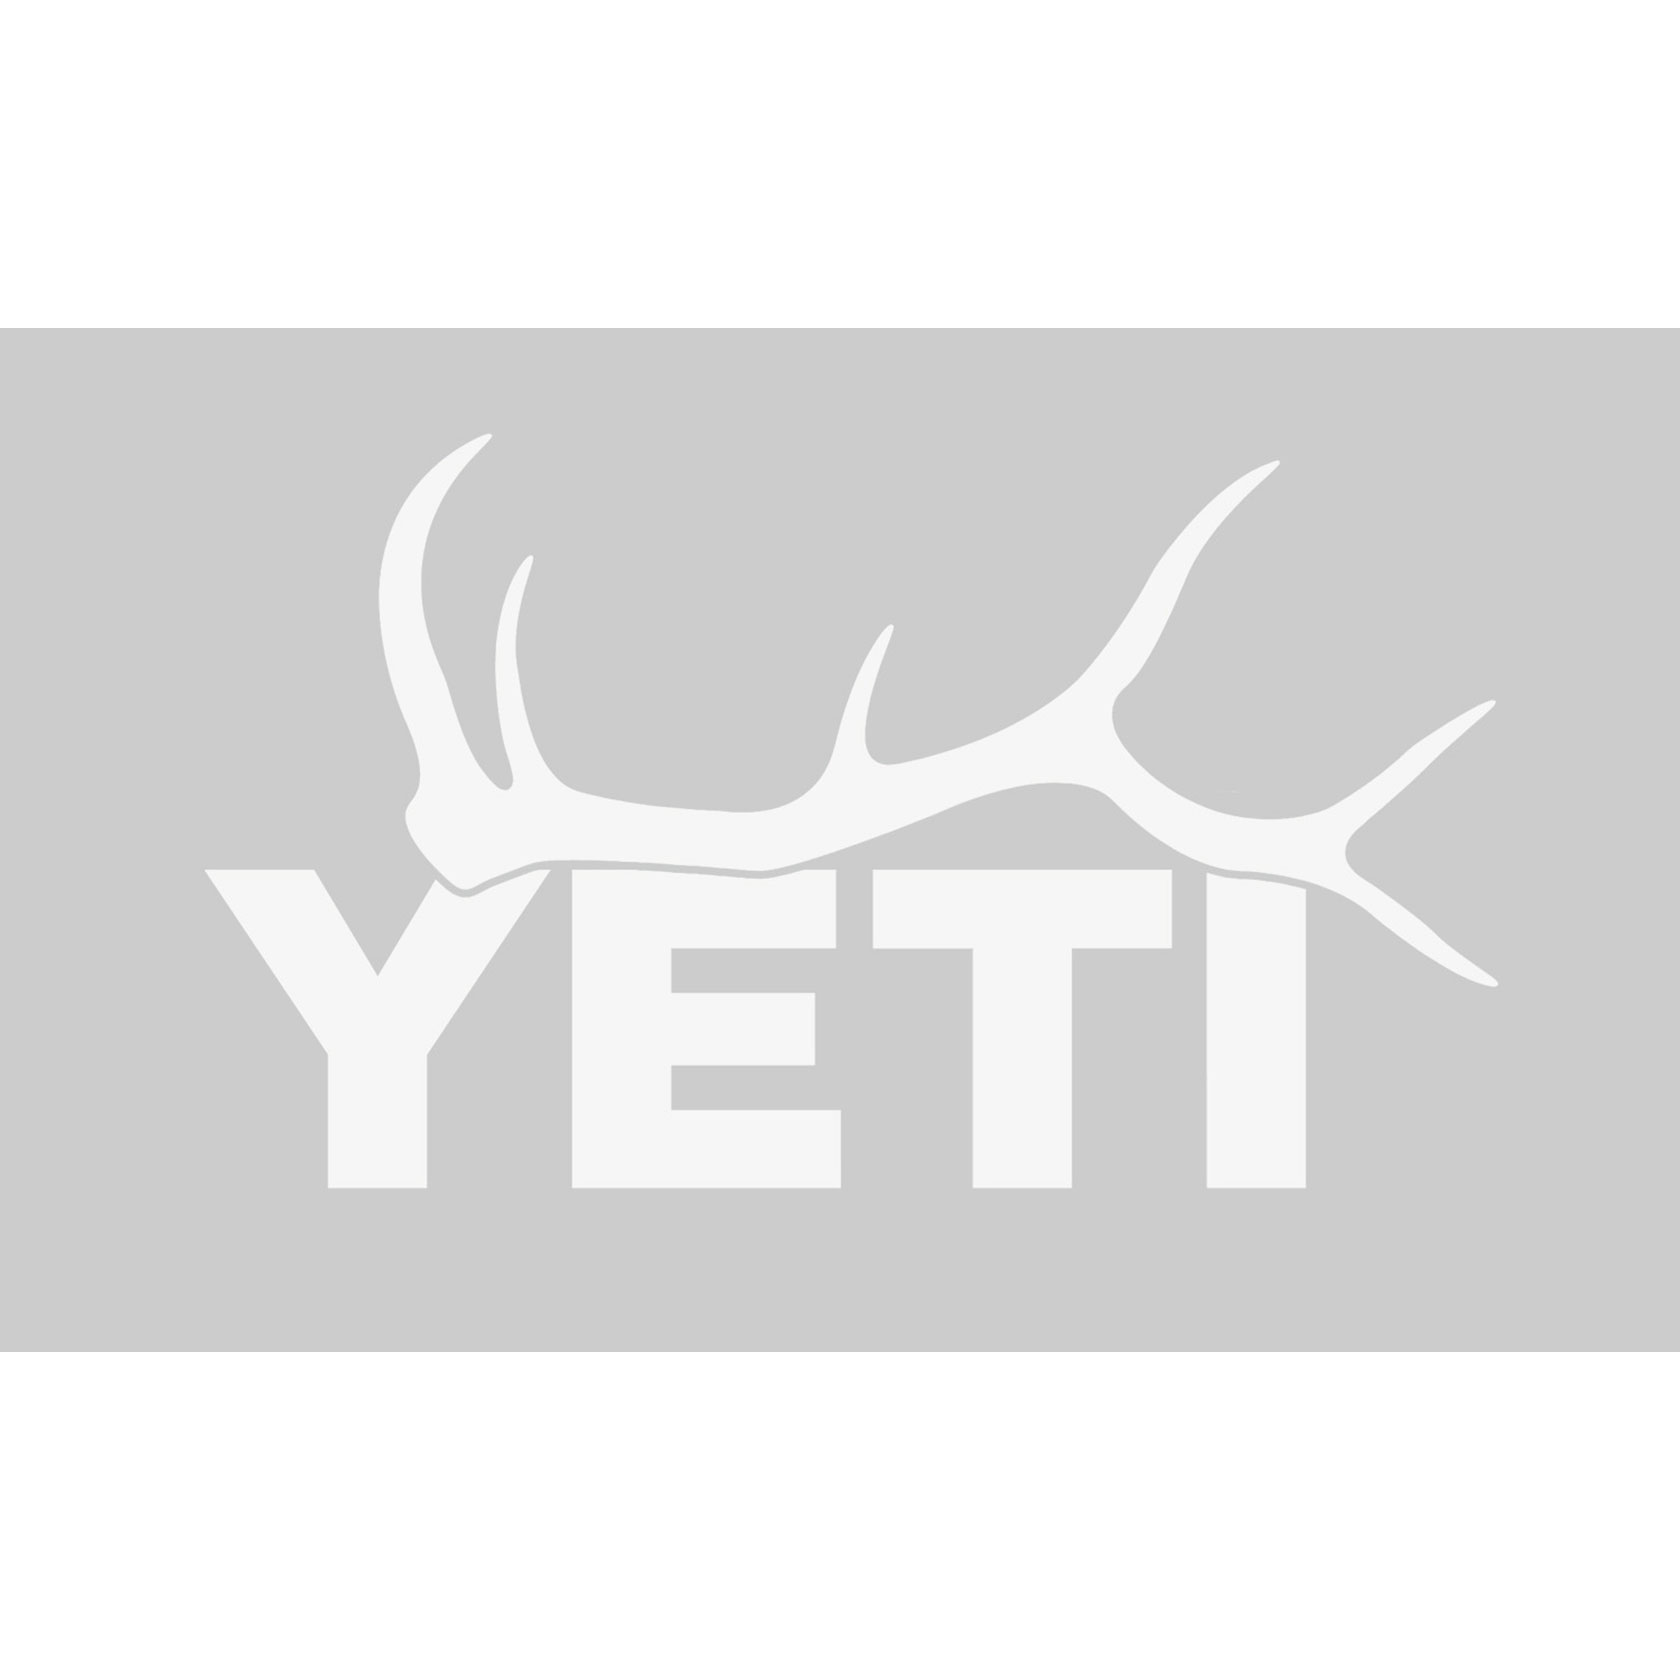 white of Yeti Coolers Elk Antler Window Decal